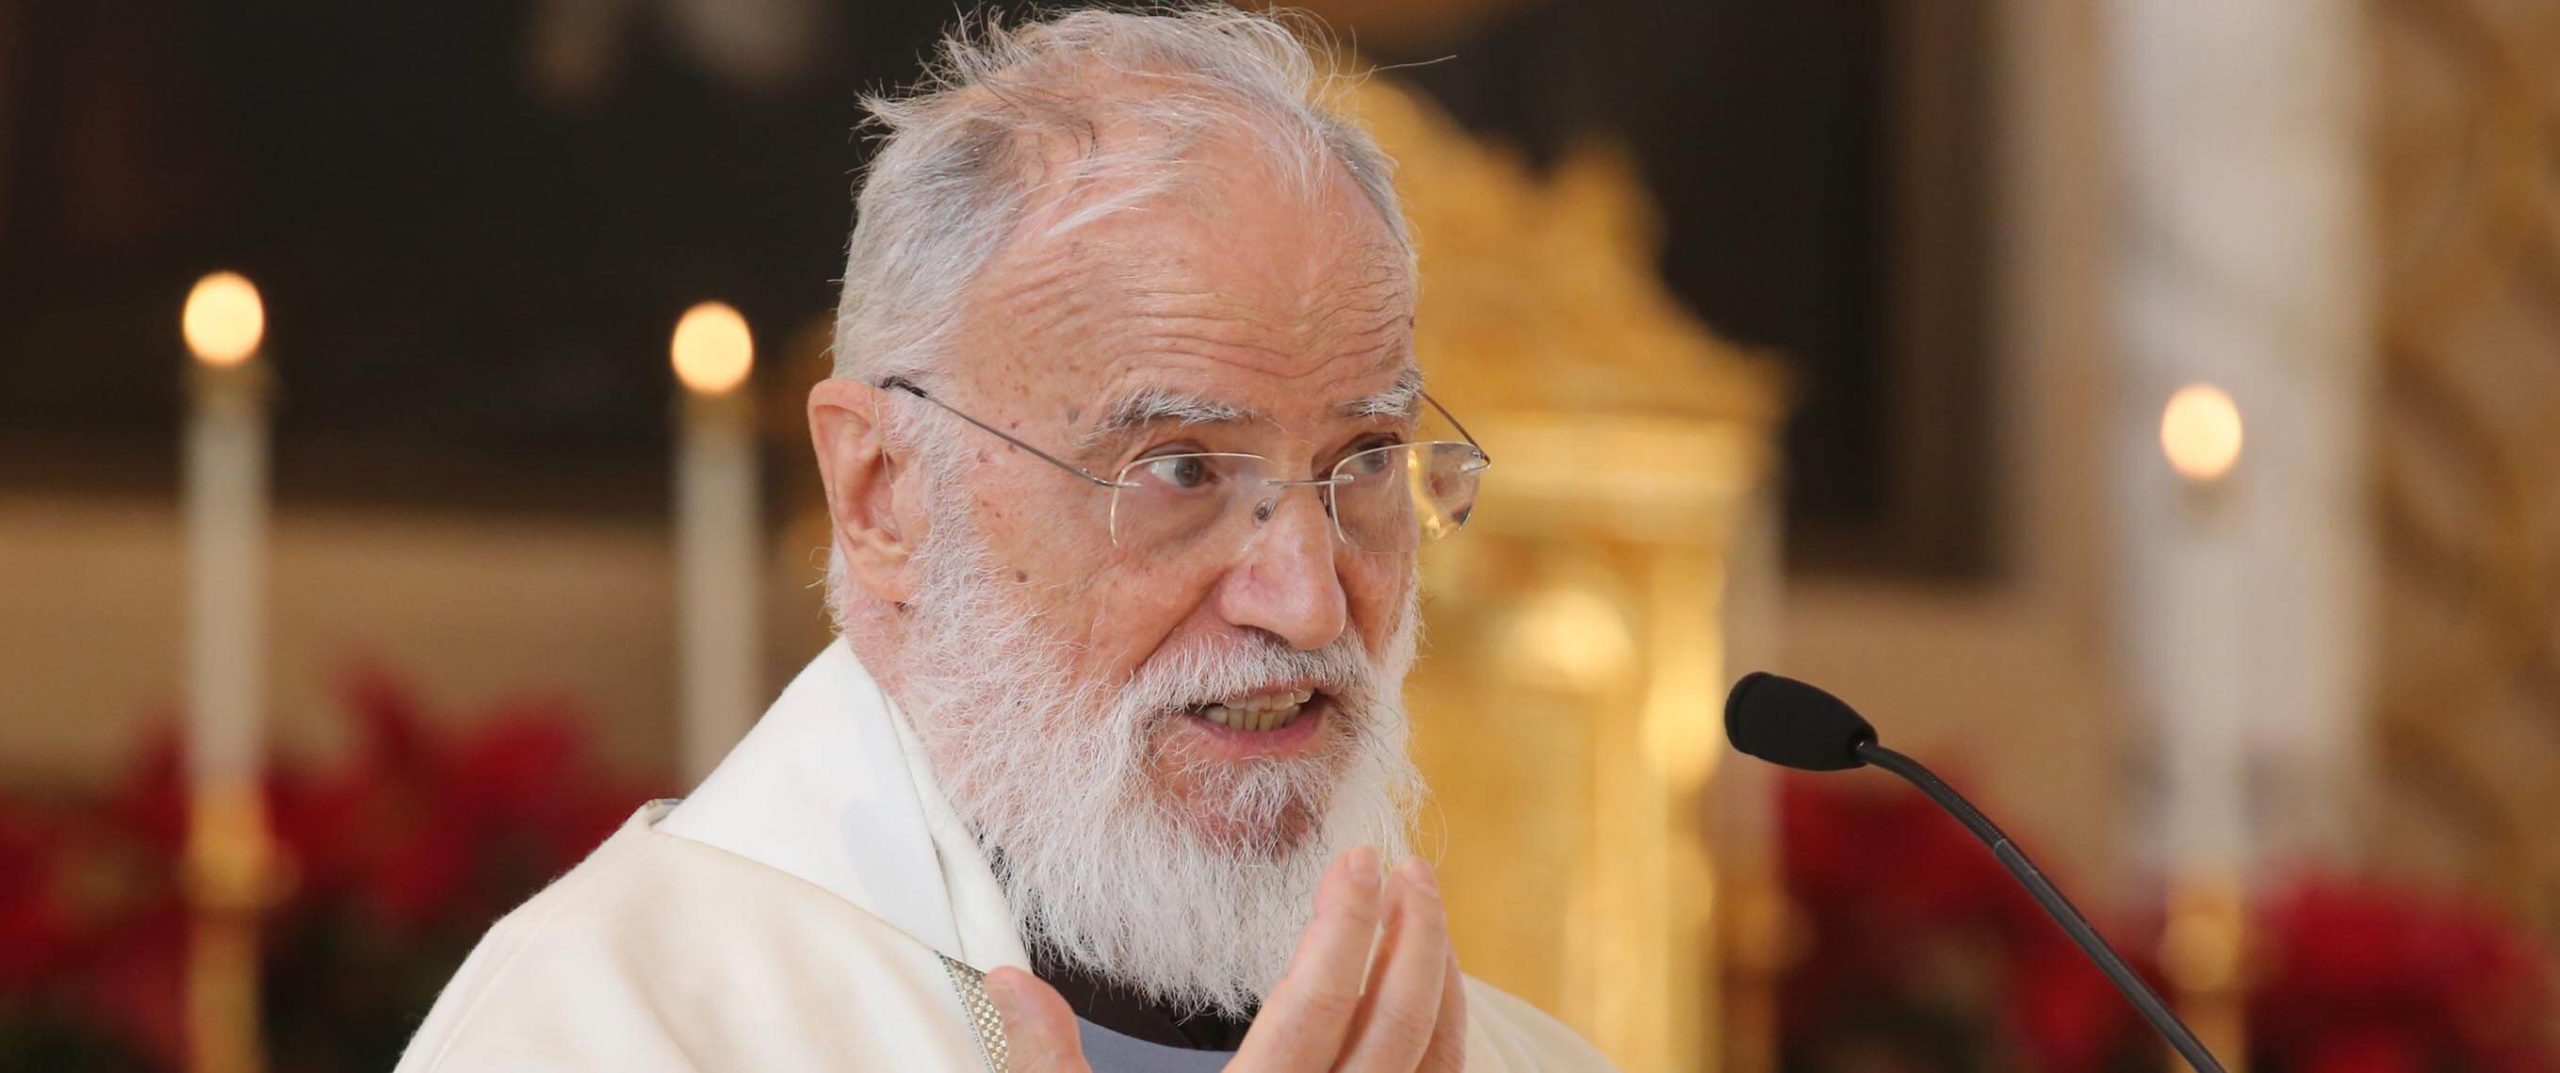 Archbishop Lori and other bishops describe retreat as profound, inspiring